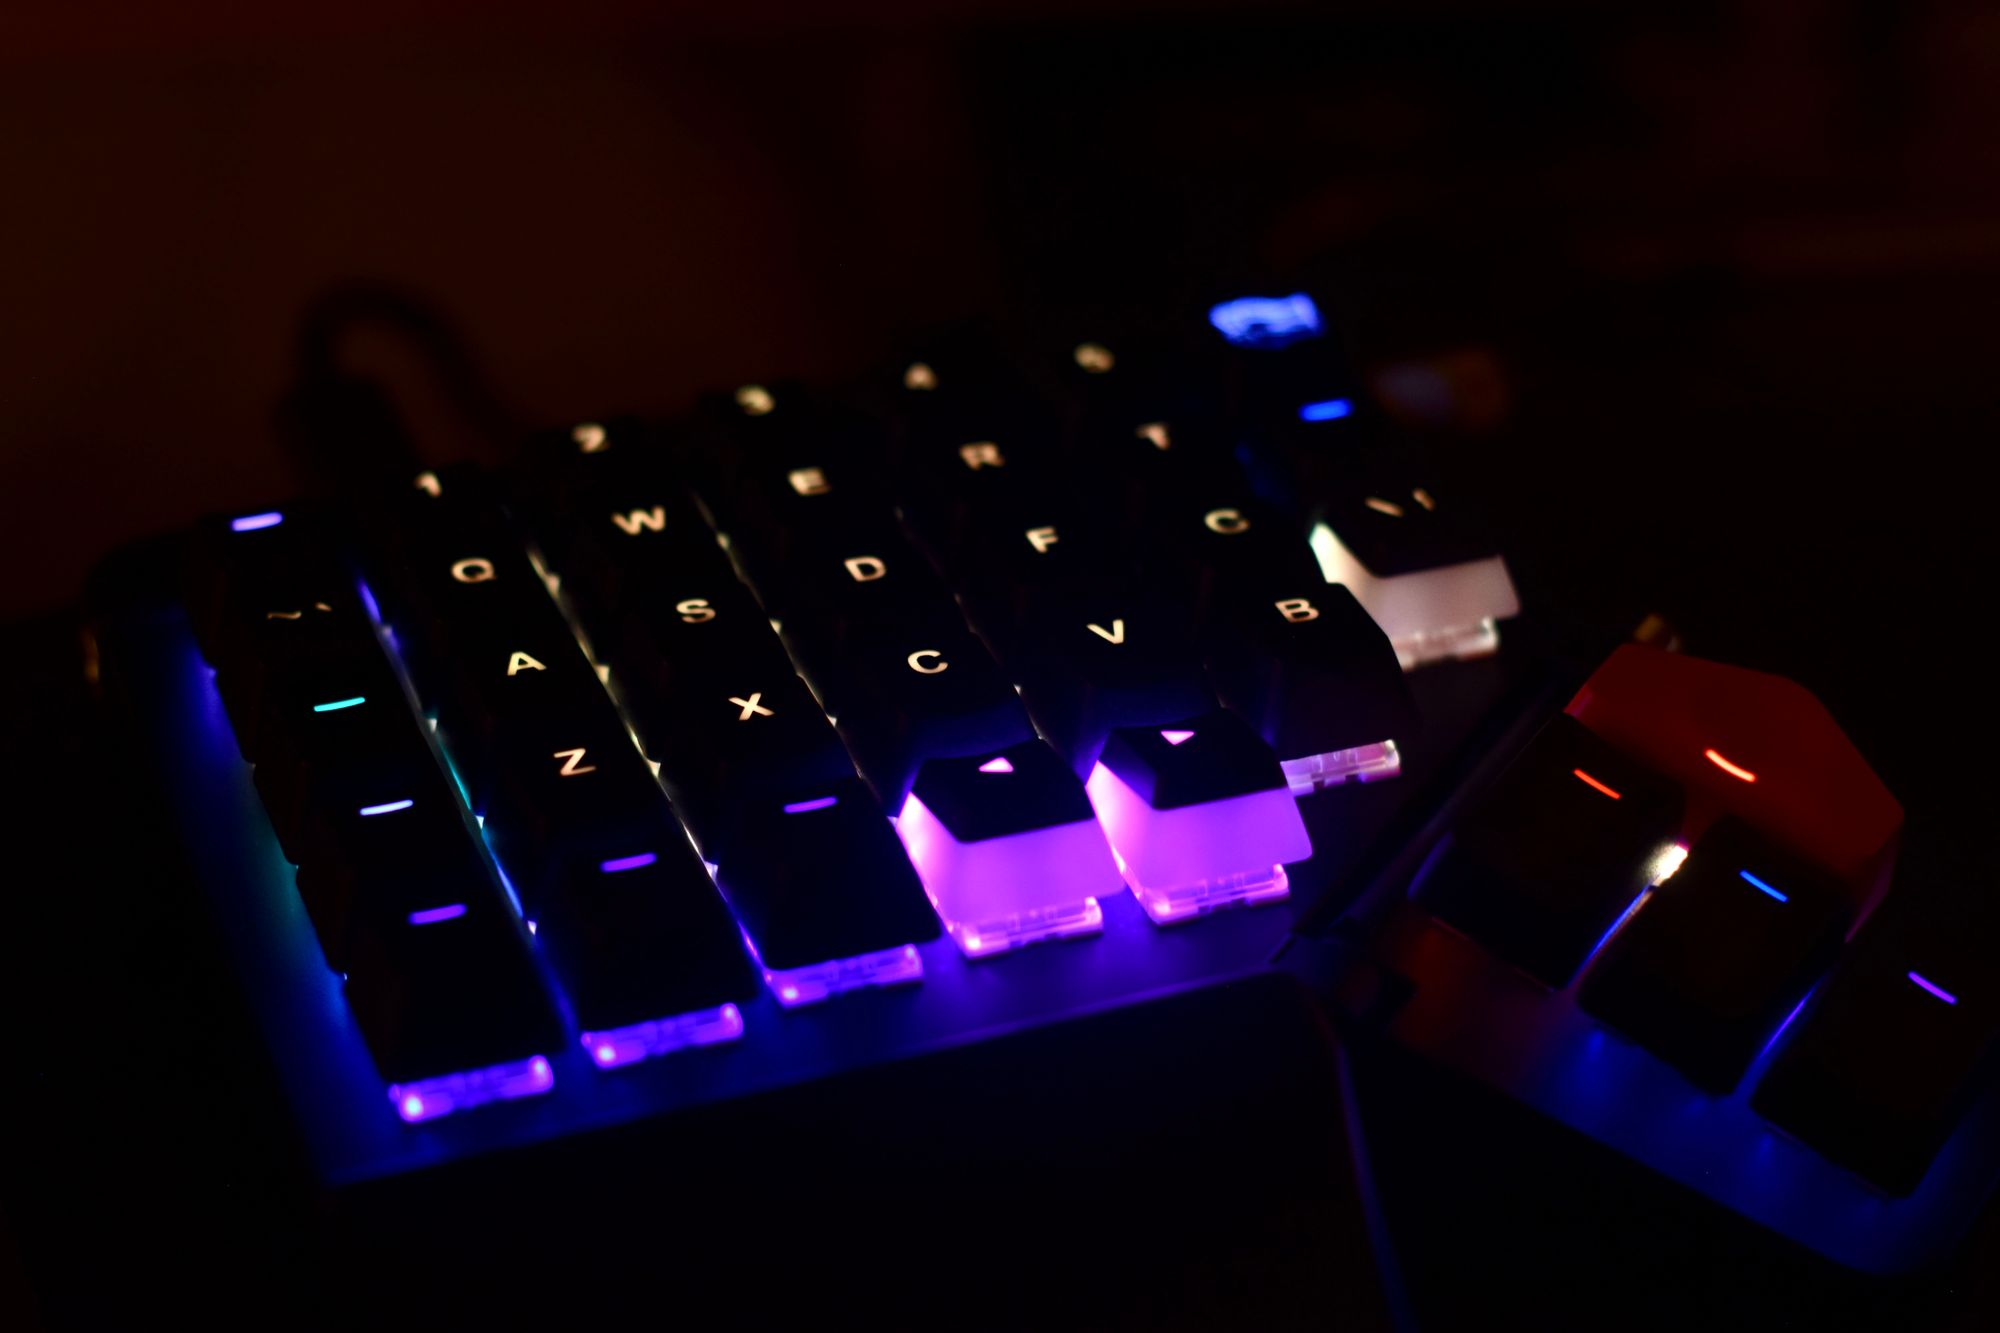 Image of Moonlander keyboard's left side, with backlit keys illuminated